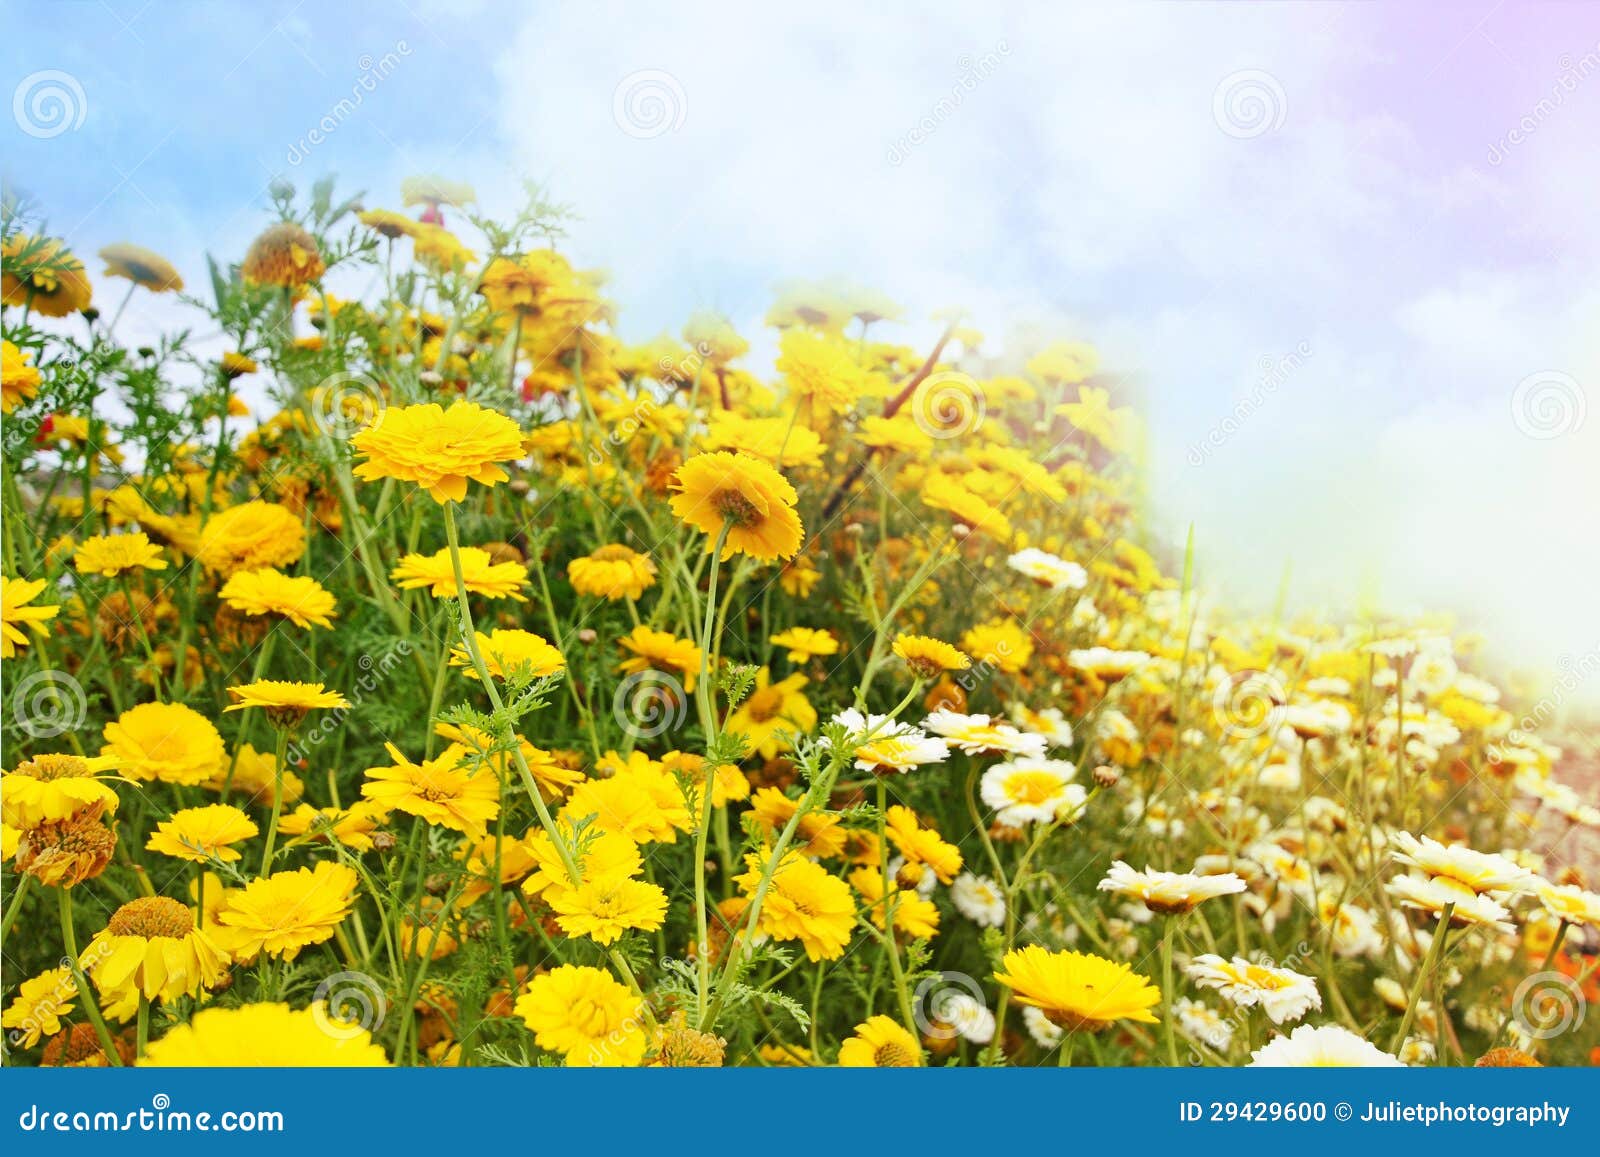 beautiful yellow sumemr flowers